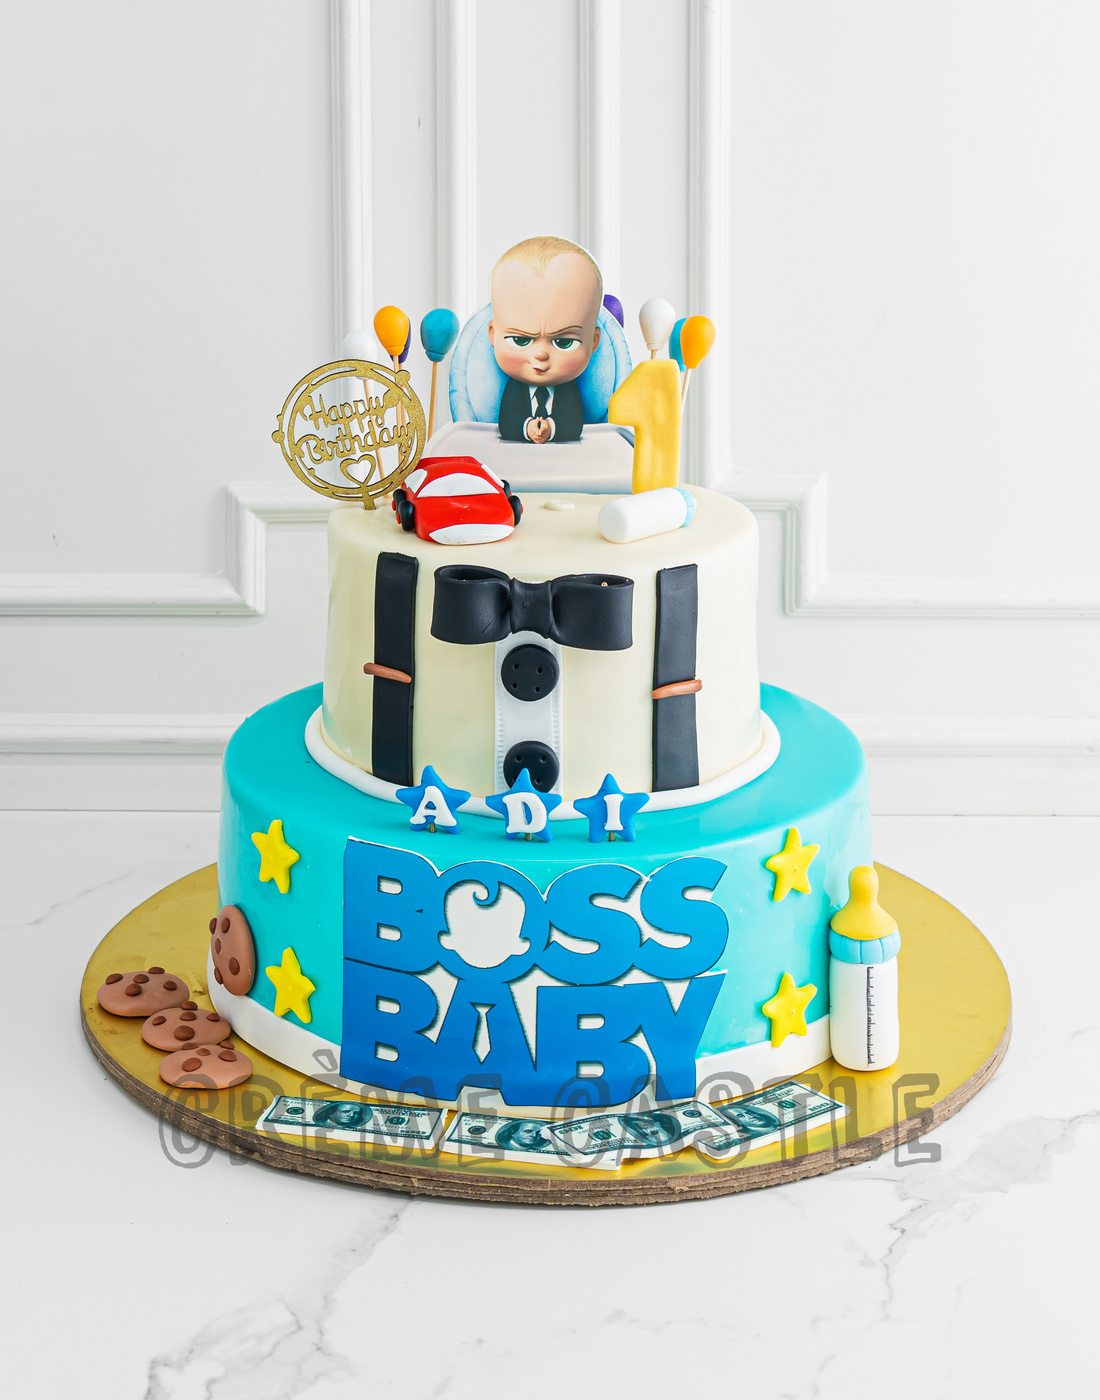 Bigg Boss Themed Birthday Cake Ideas For Every Bigg Boss Fan Out There! |  HerZindagi